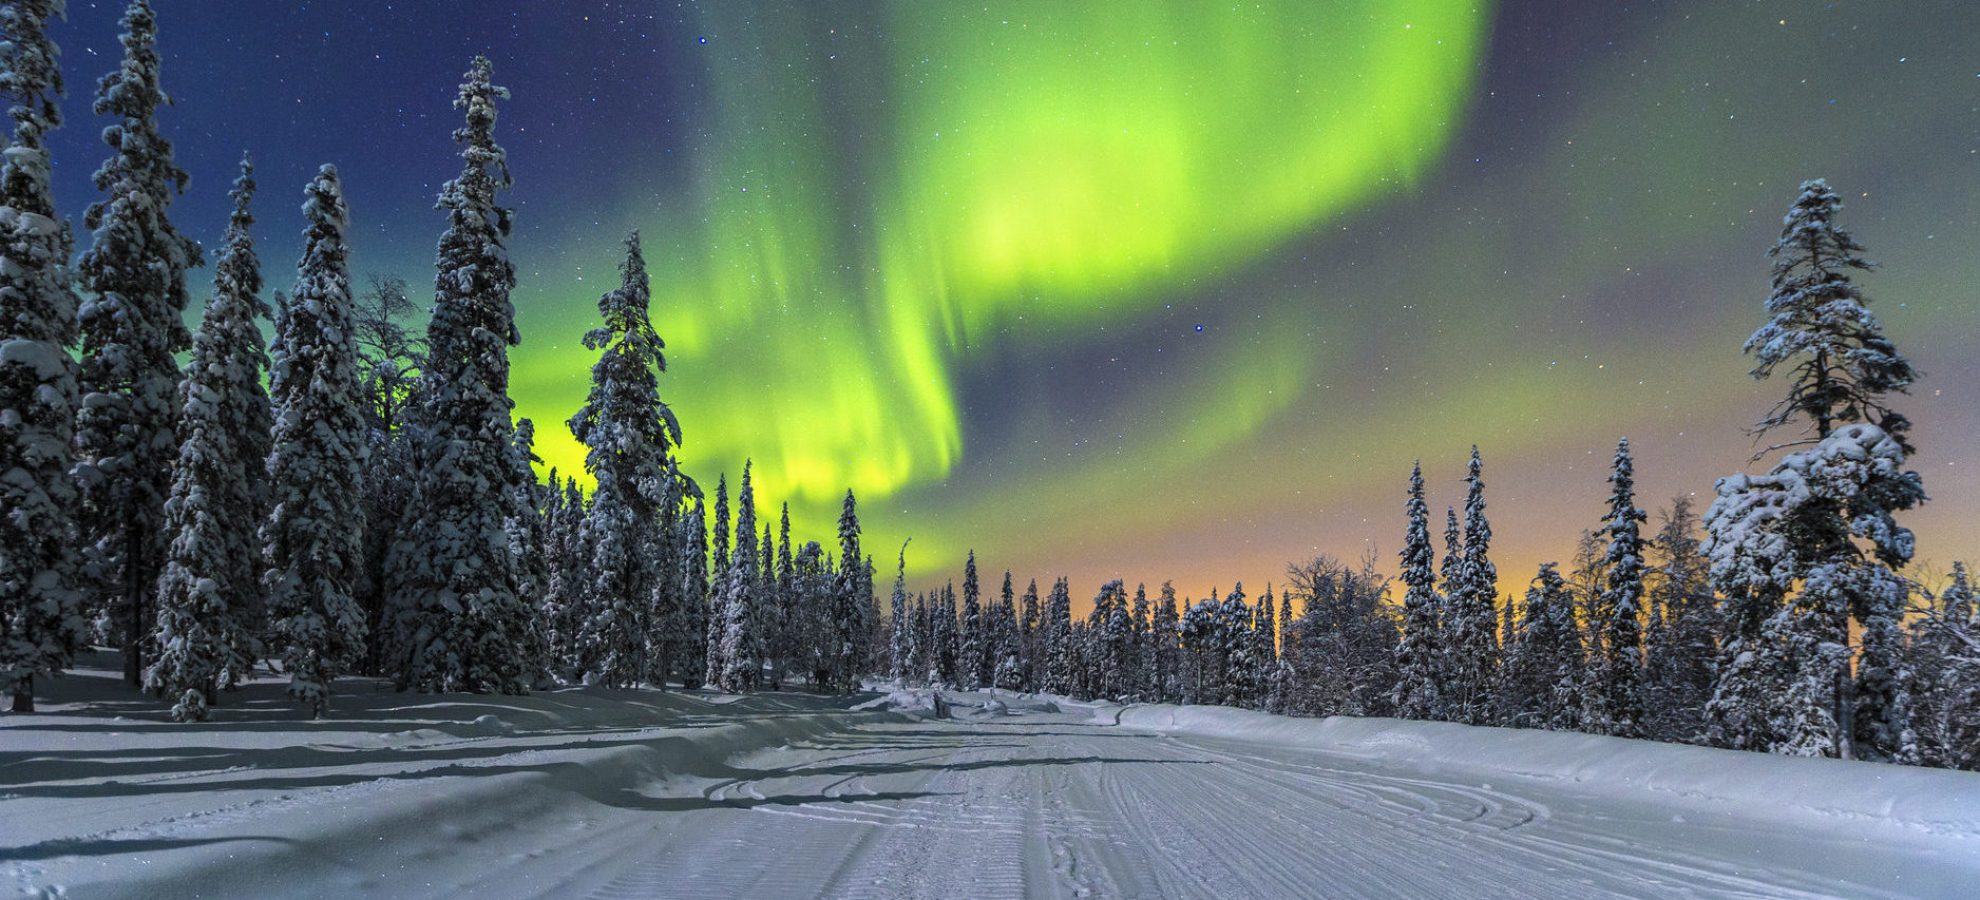 Finland - Aurora Borealis